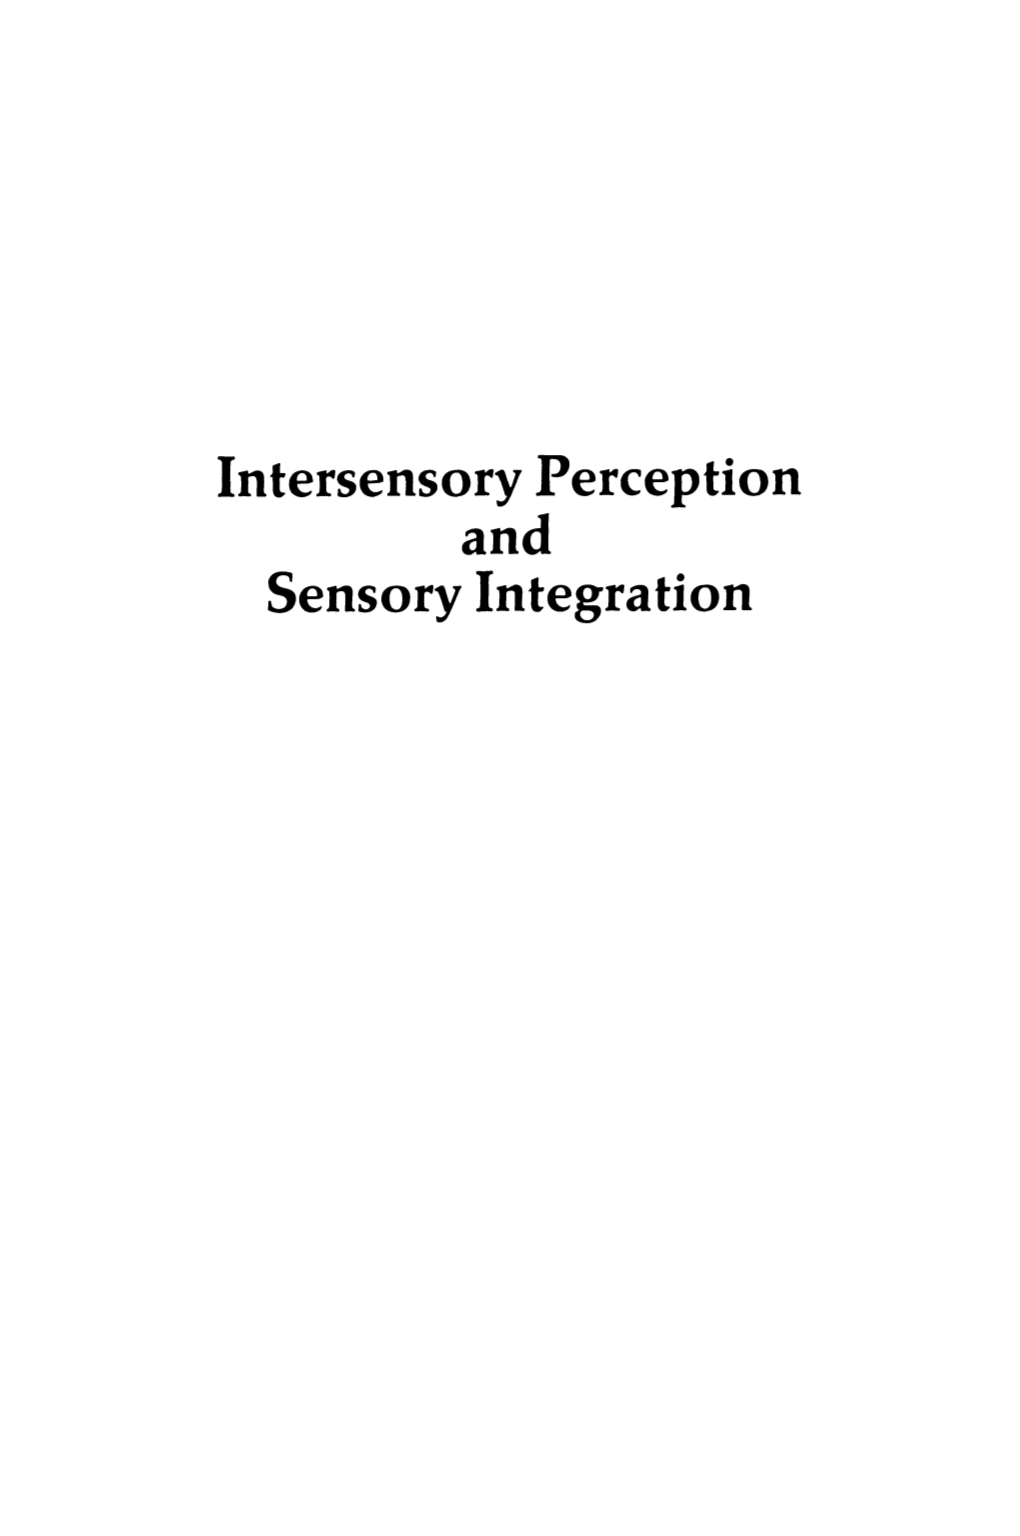 Intersensory Perception and Sensory Integration PERCEPTION and PERCEPTUAL DEVELOPMENT a Critical Review Series